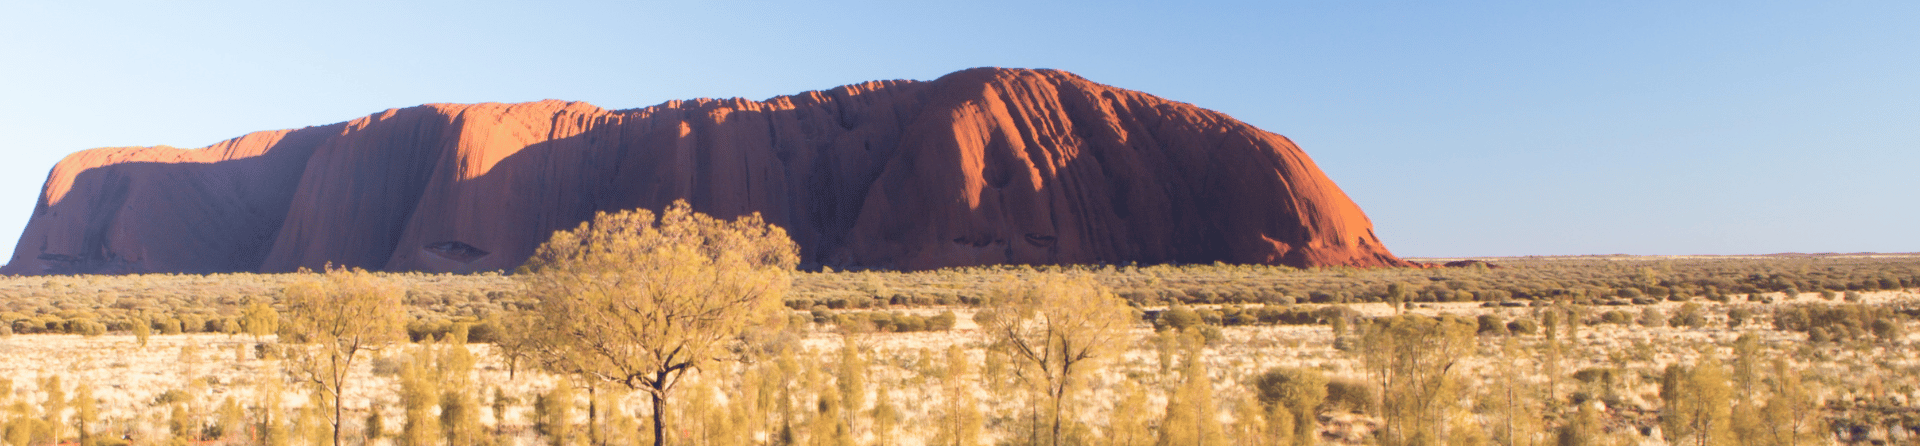 How was Uluru formed